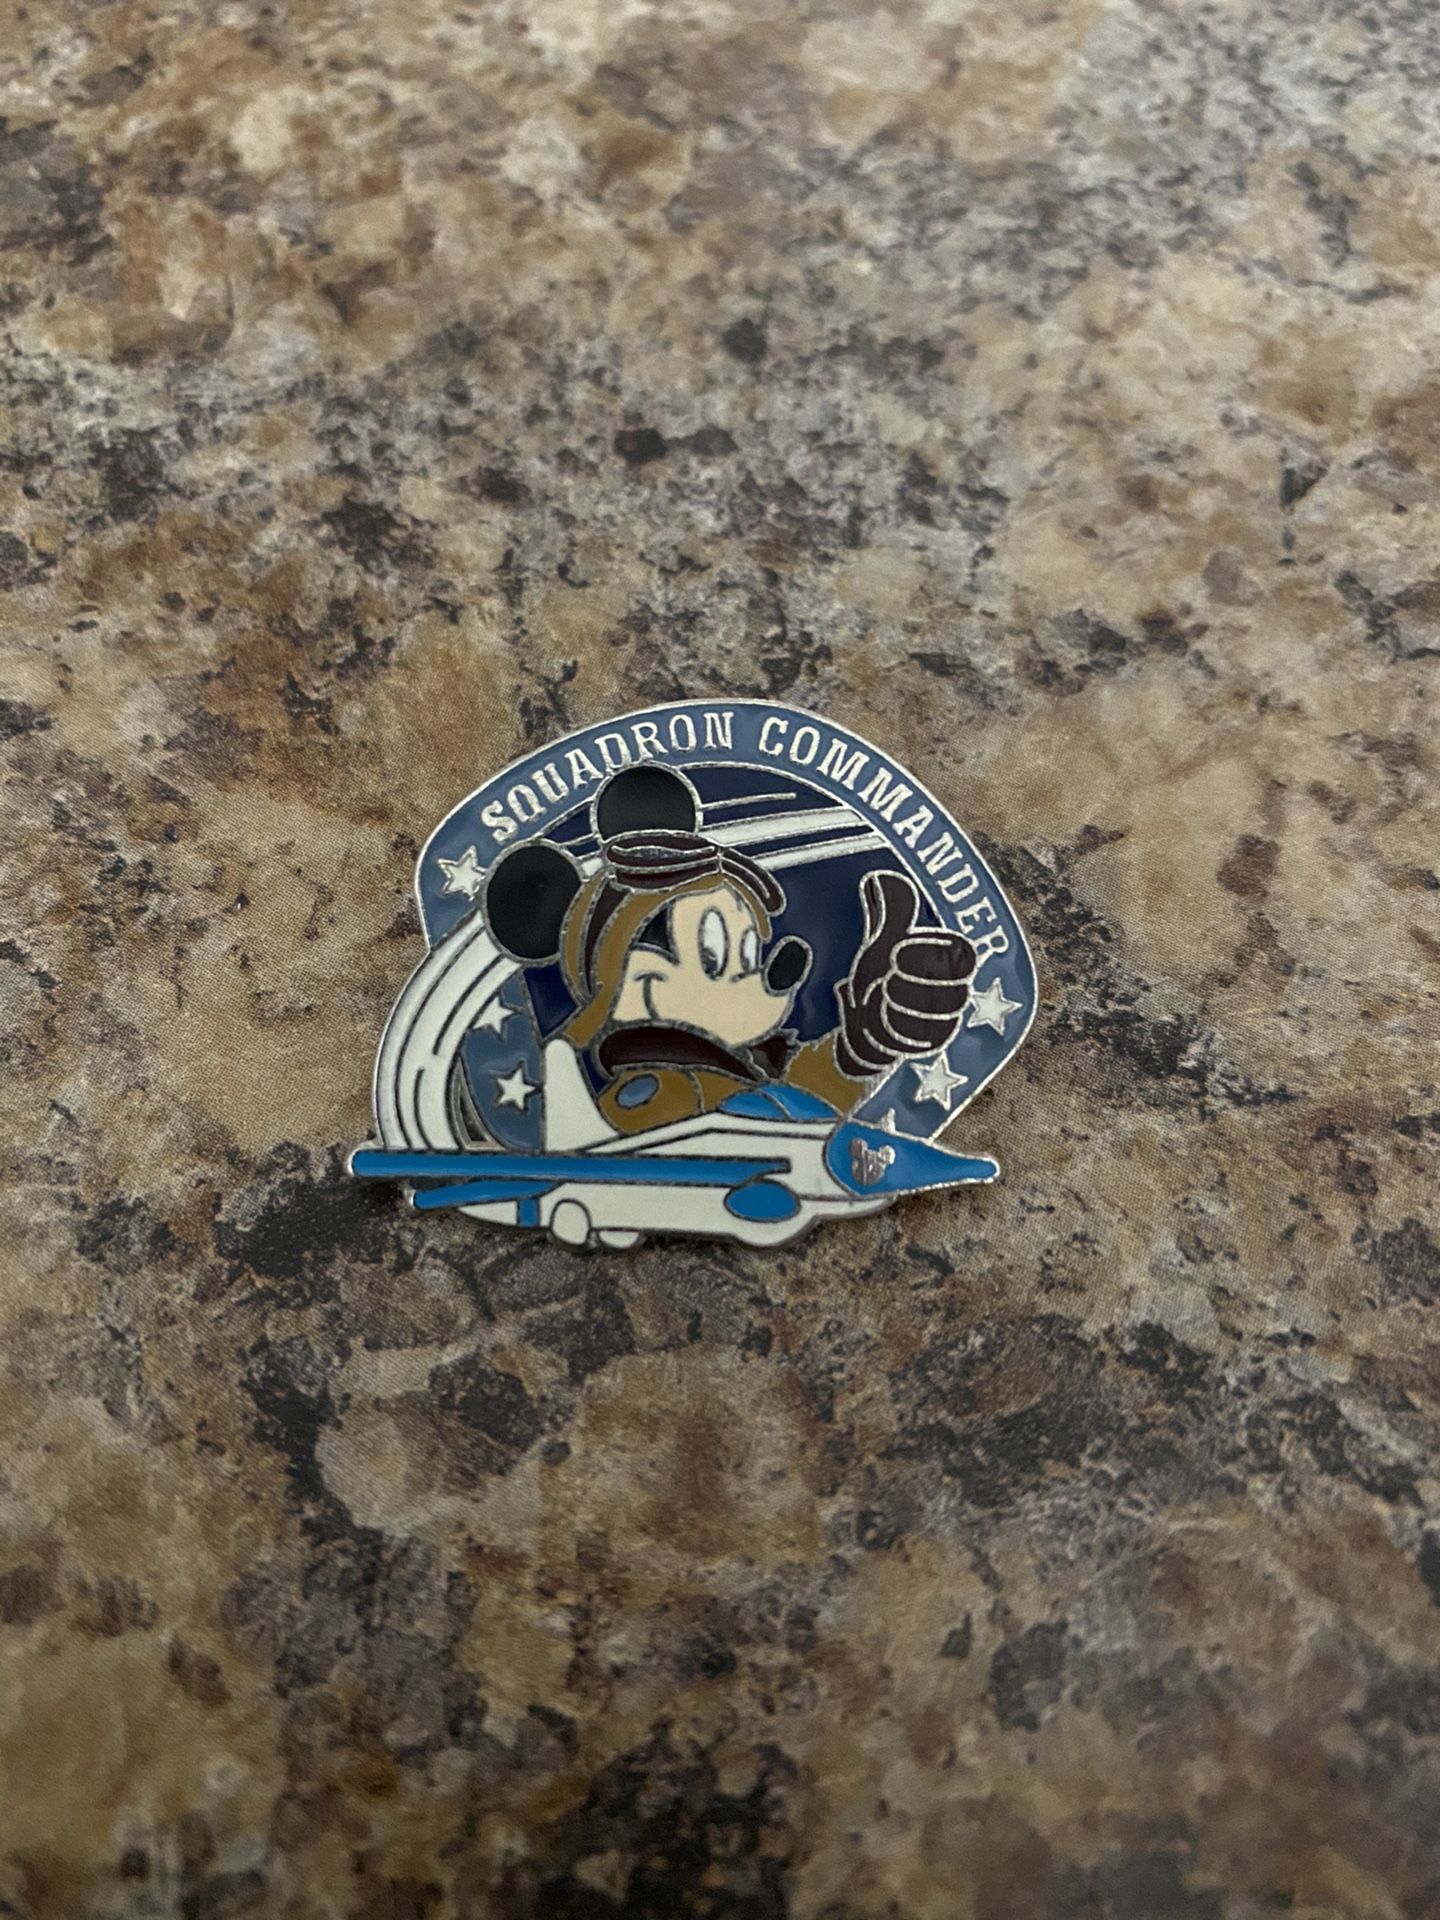 Disney trading pin